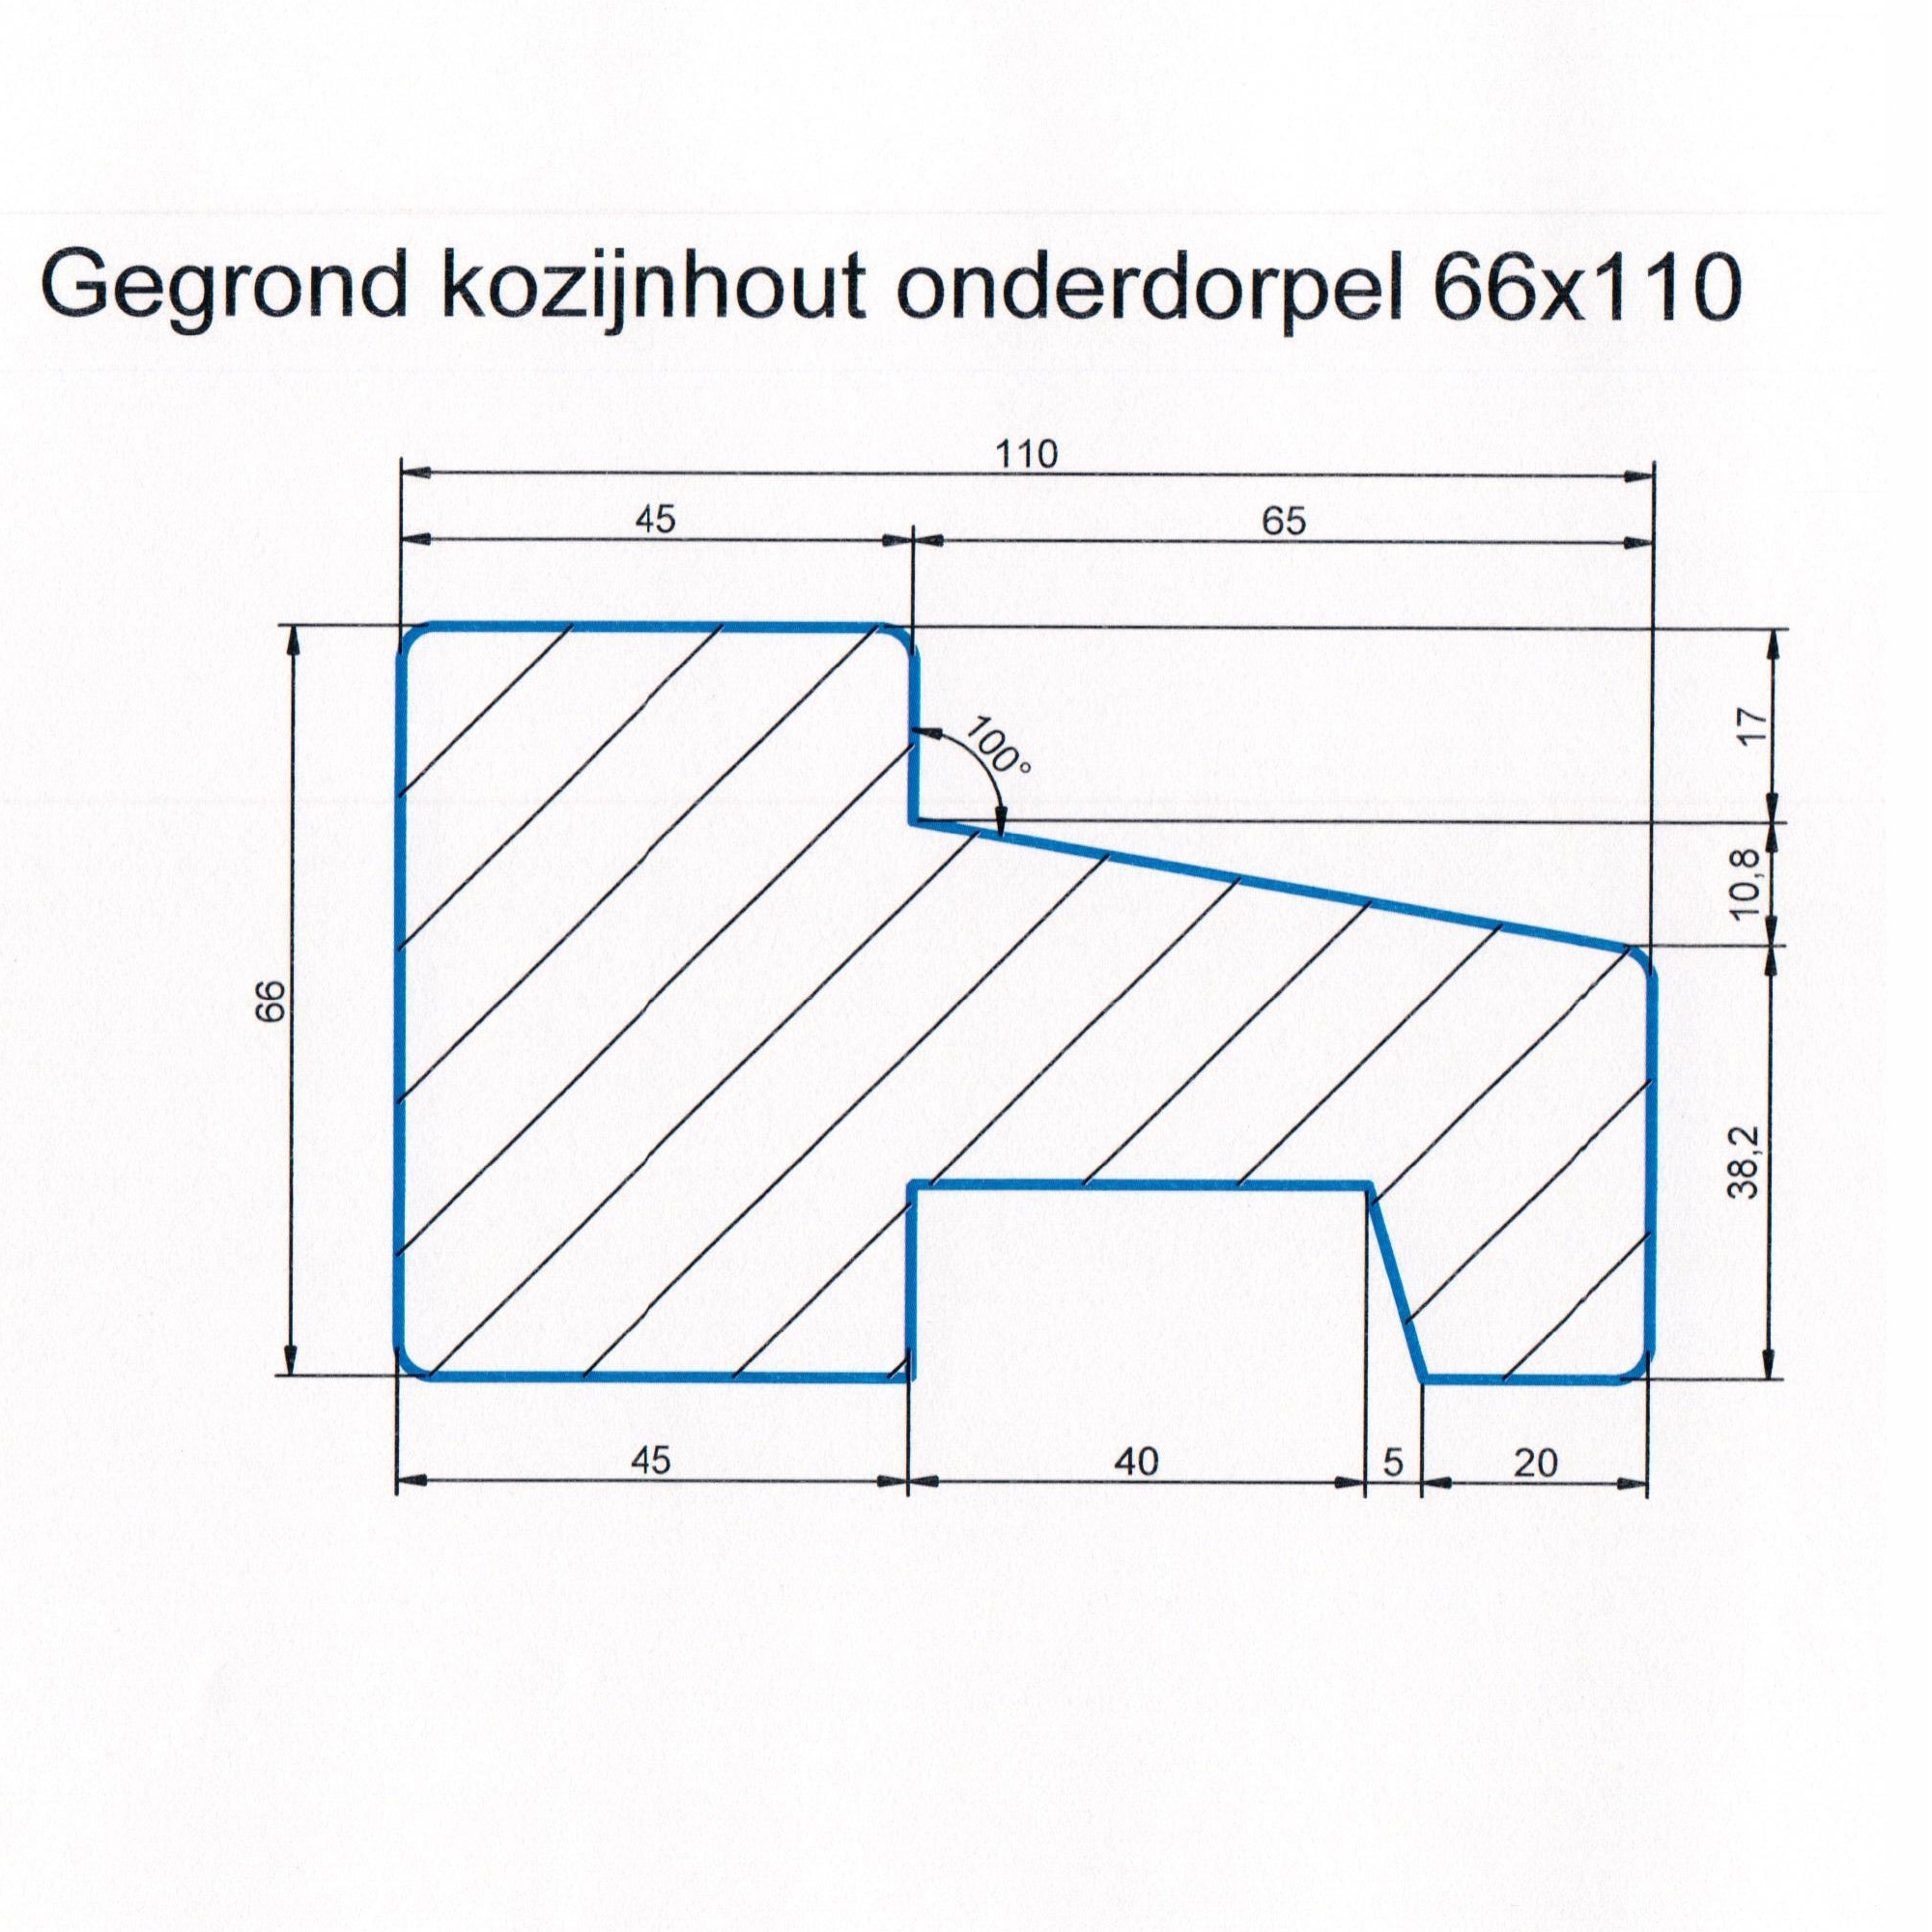 Hardhout 66x110 kozijnhout gegrond L=4720 onderdorpel